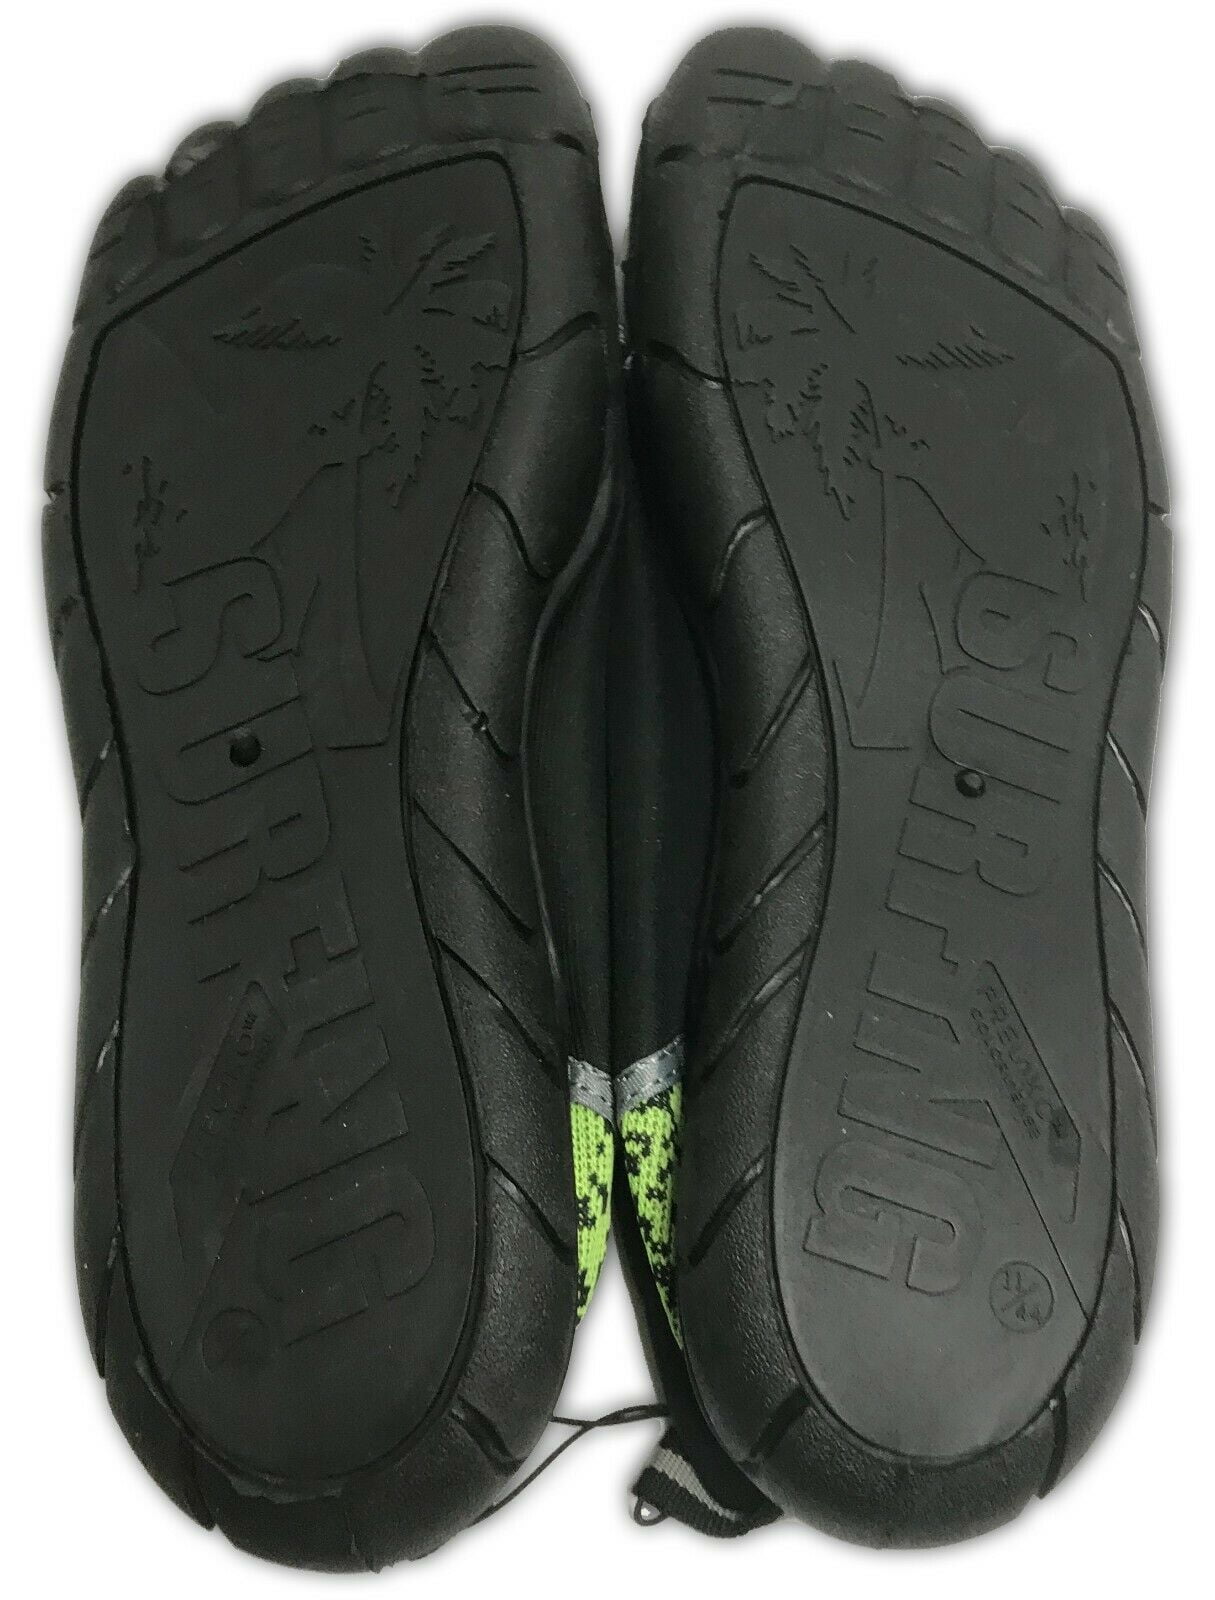 Details about   Fresko Men's Slip On Comfort Water Shoes 11 Medium US Black and Green 